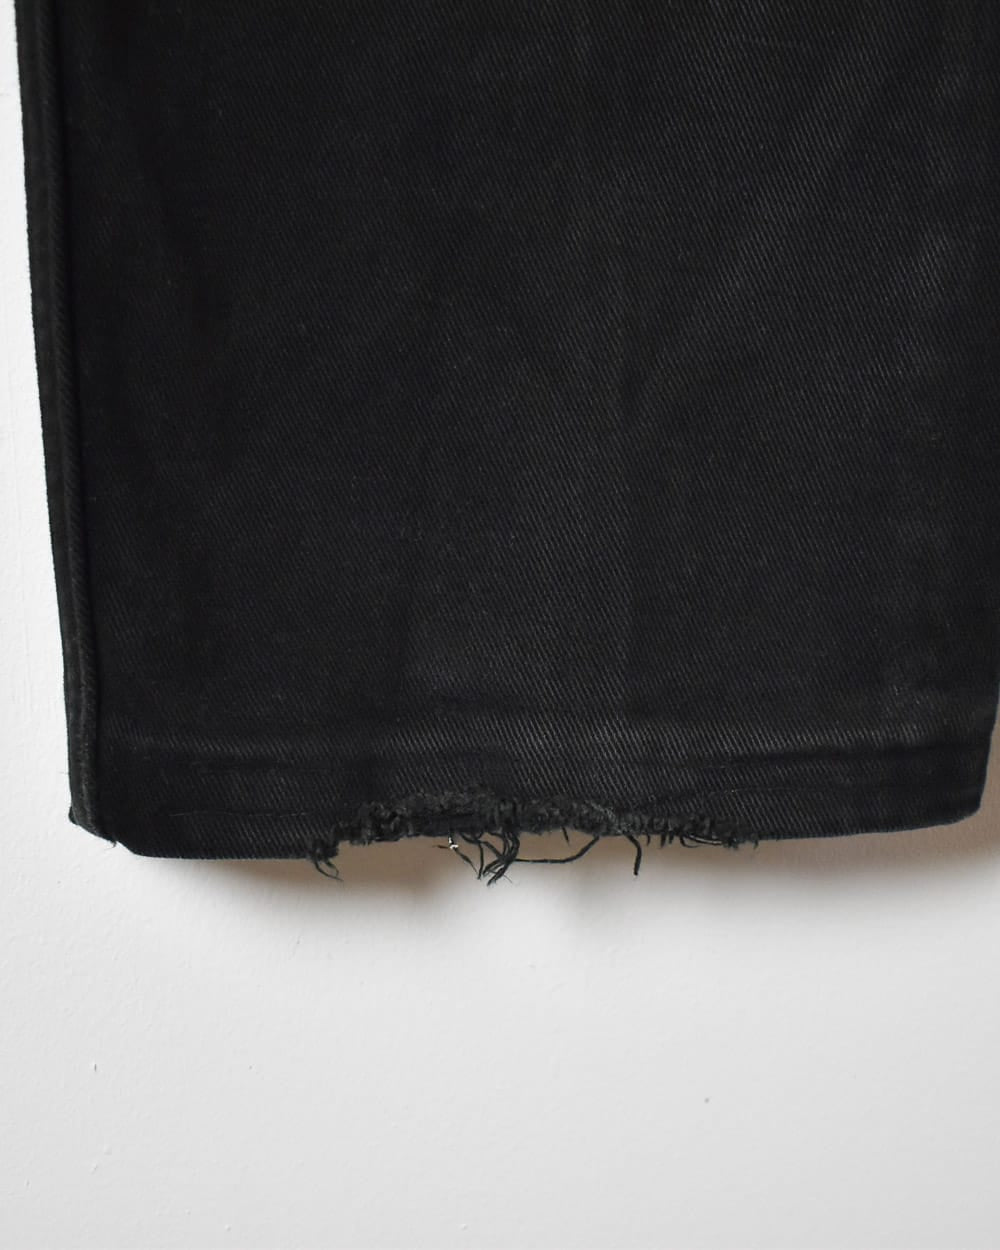 Black Levi's 501 Jeans - W38 L28